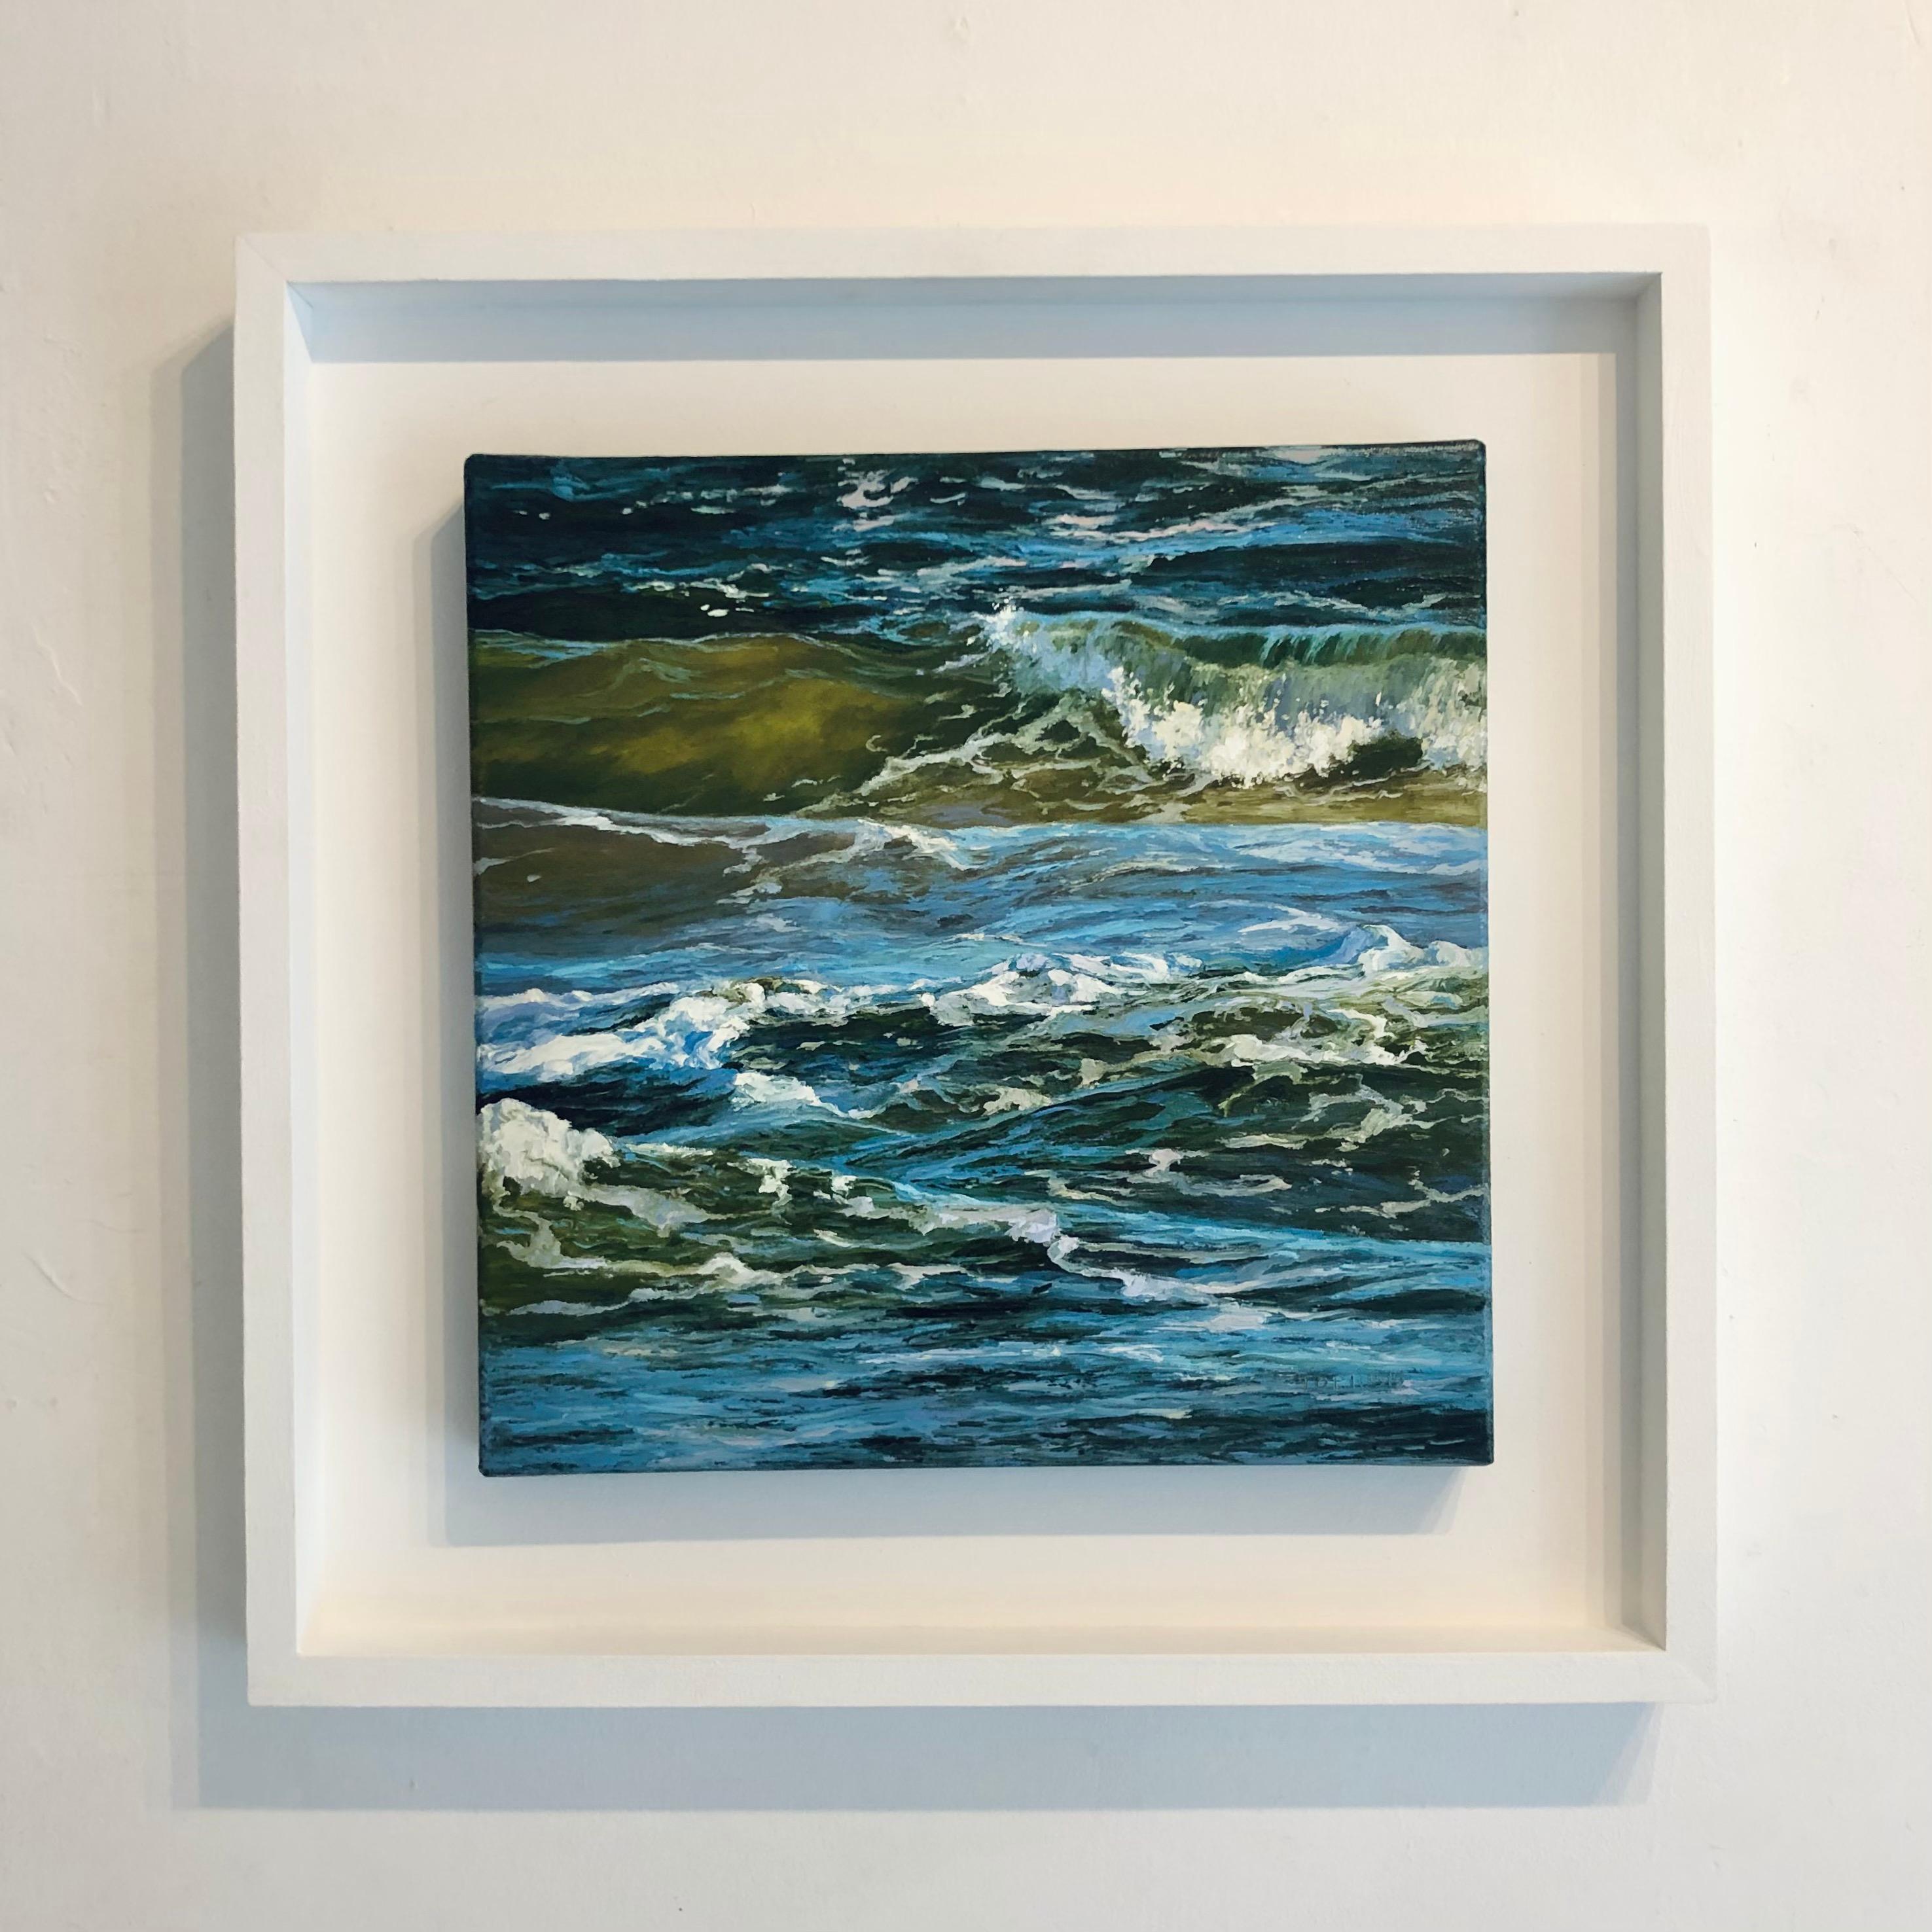 Sea Bird - Seascape coastal ocean landscape oil painting modern realism artwork - Painting by Erika Toliusis